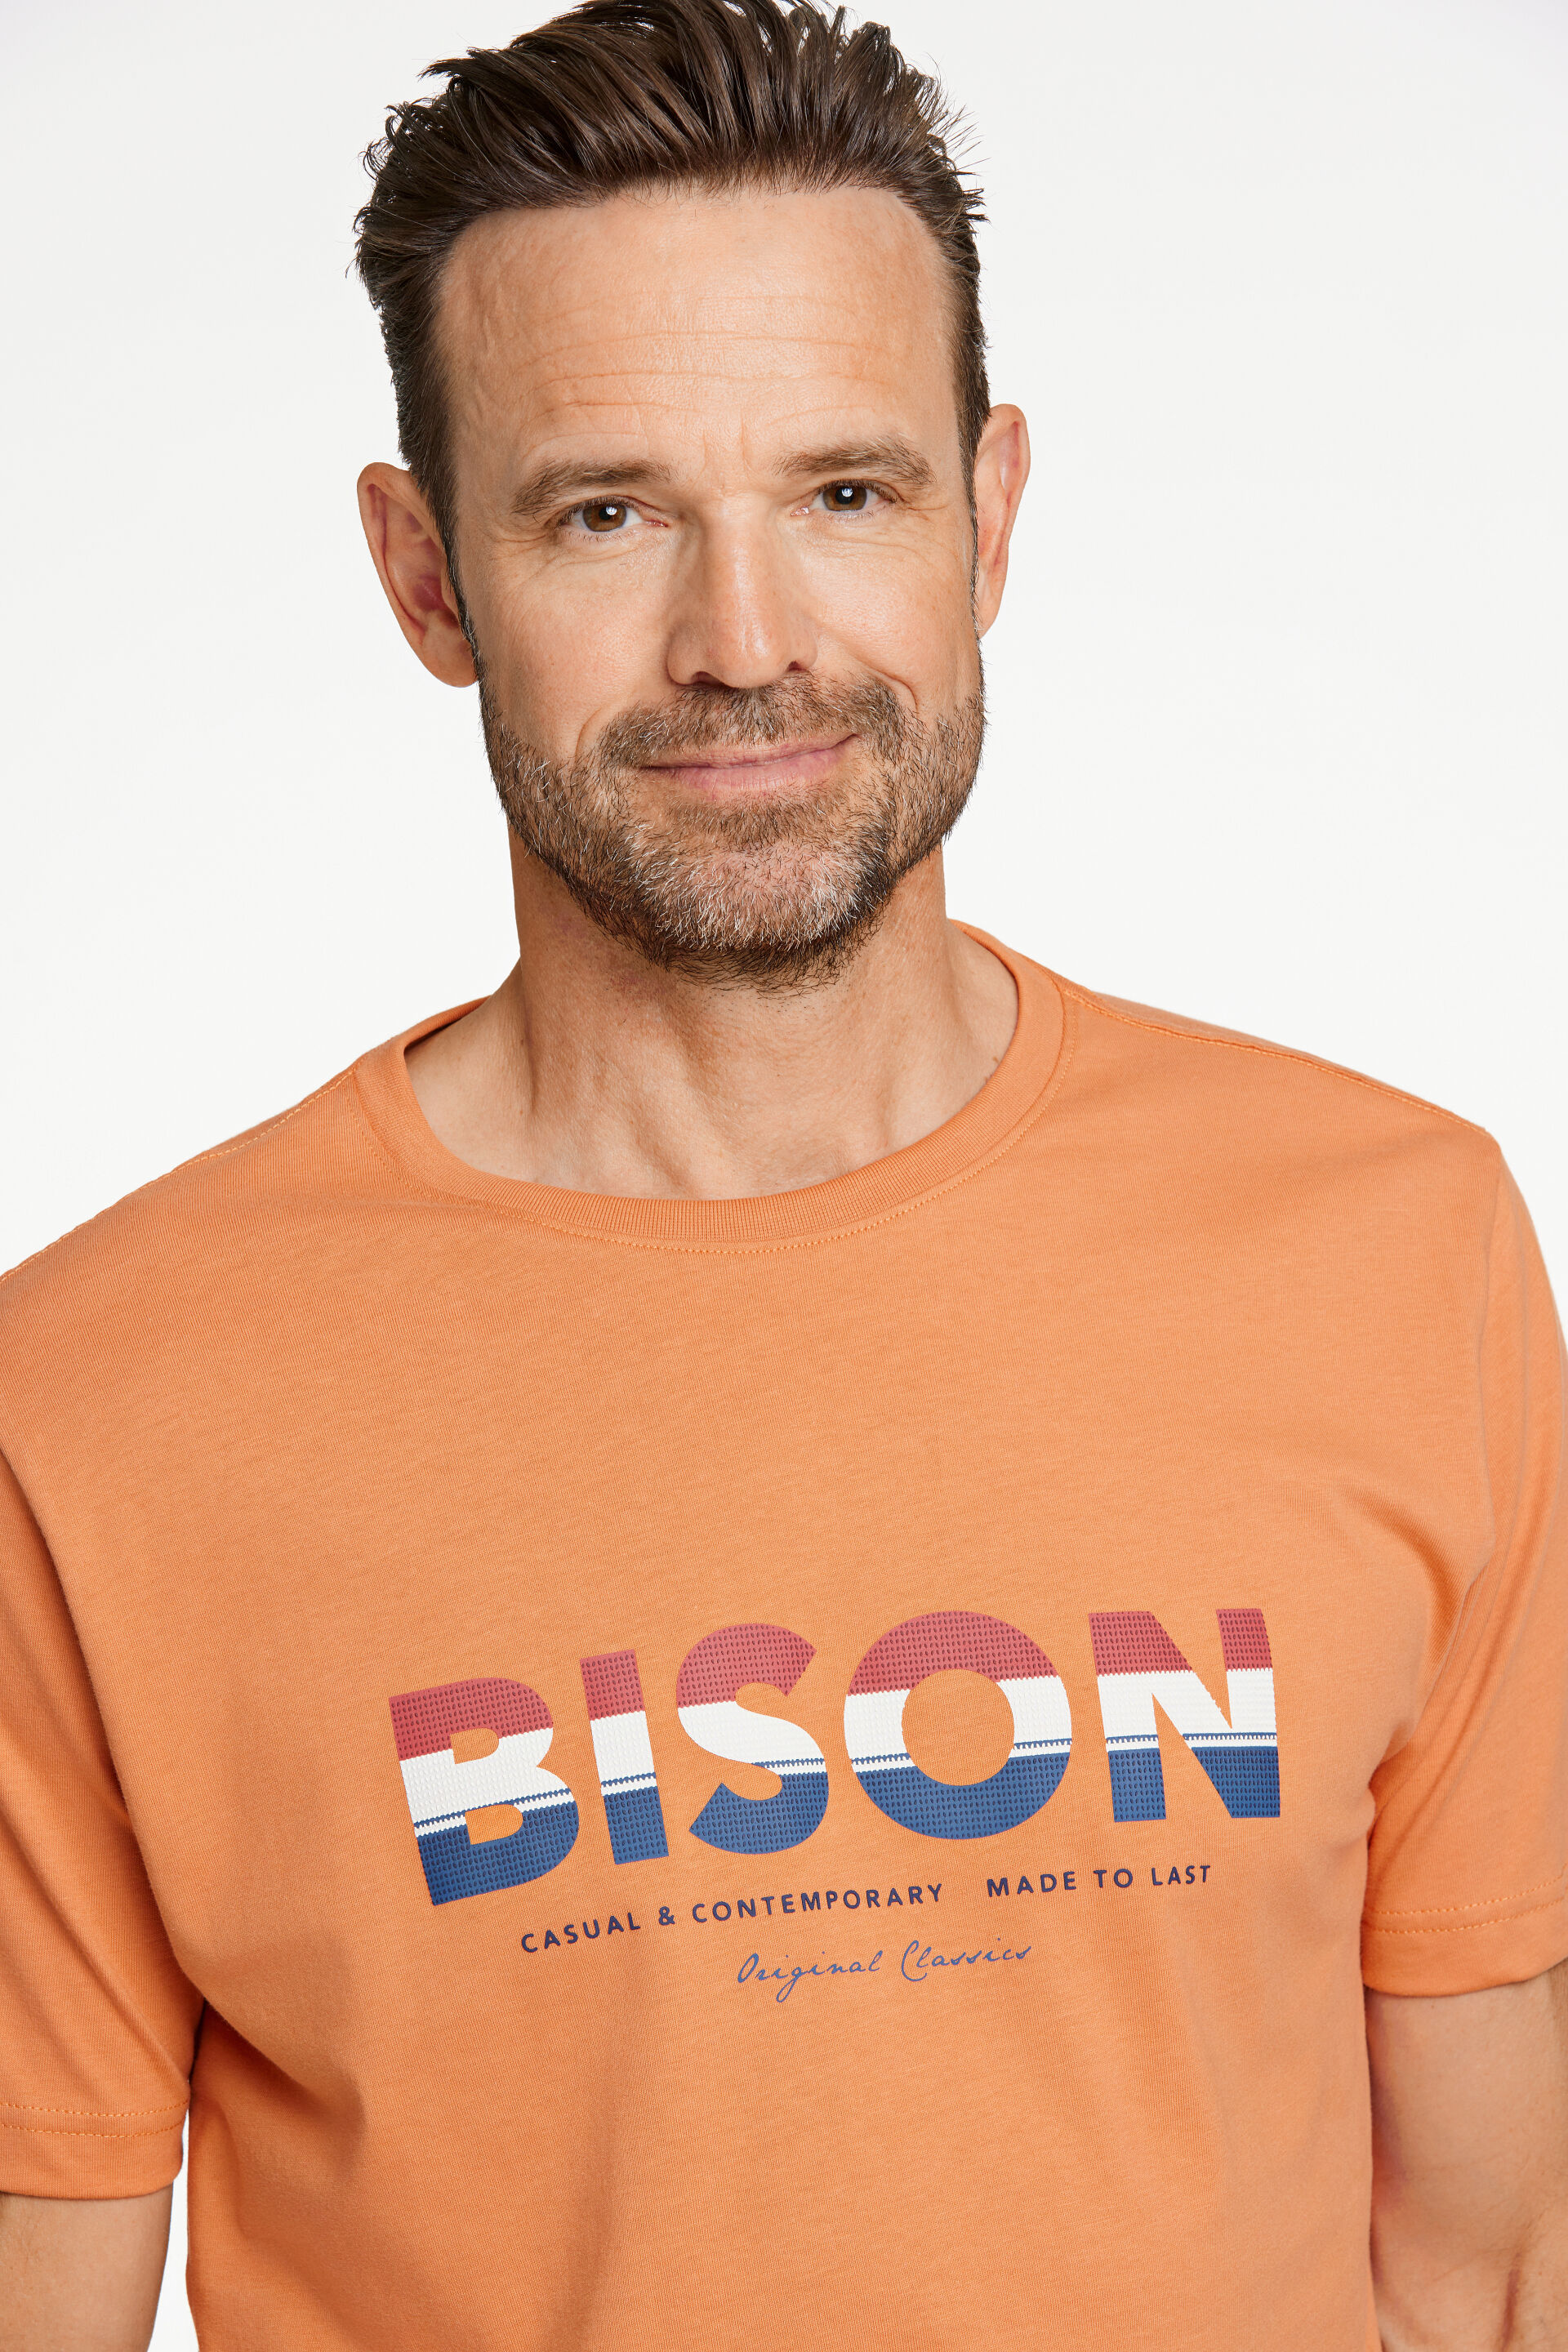 Bison  T-shirt 80-400113